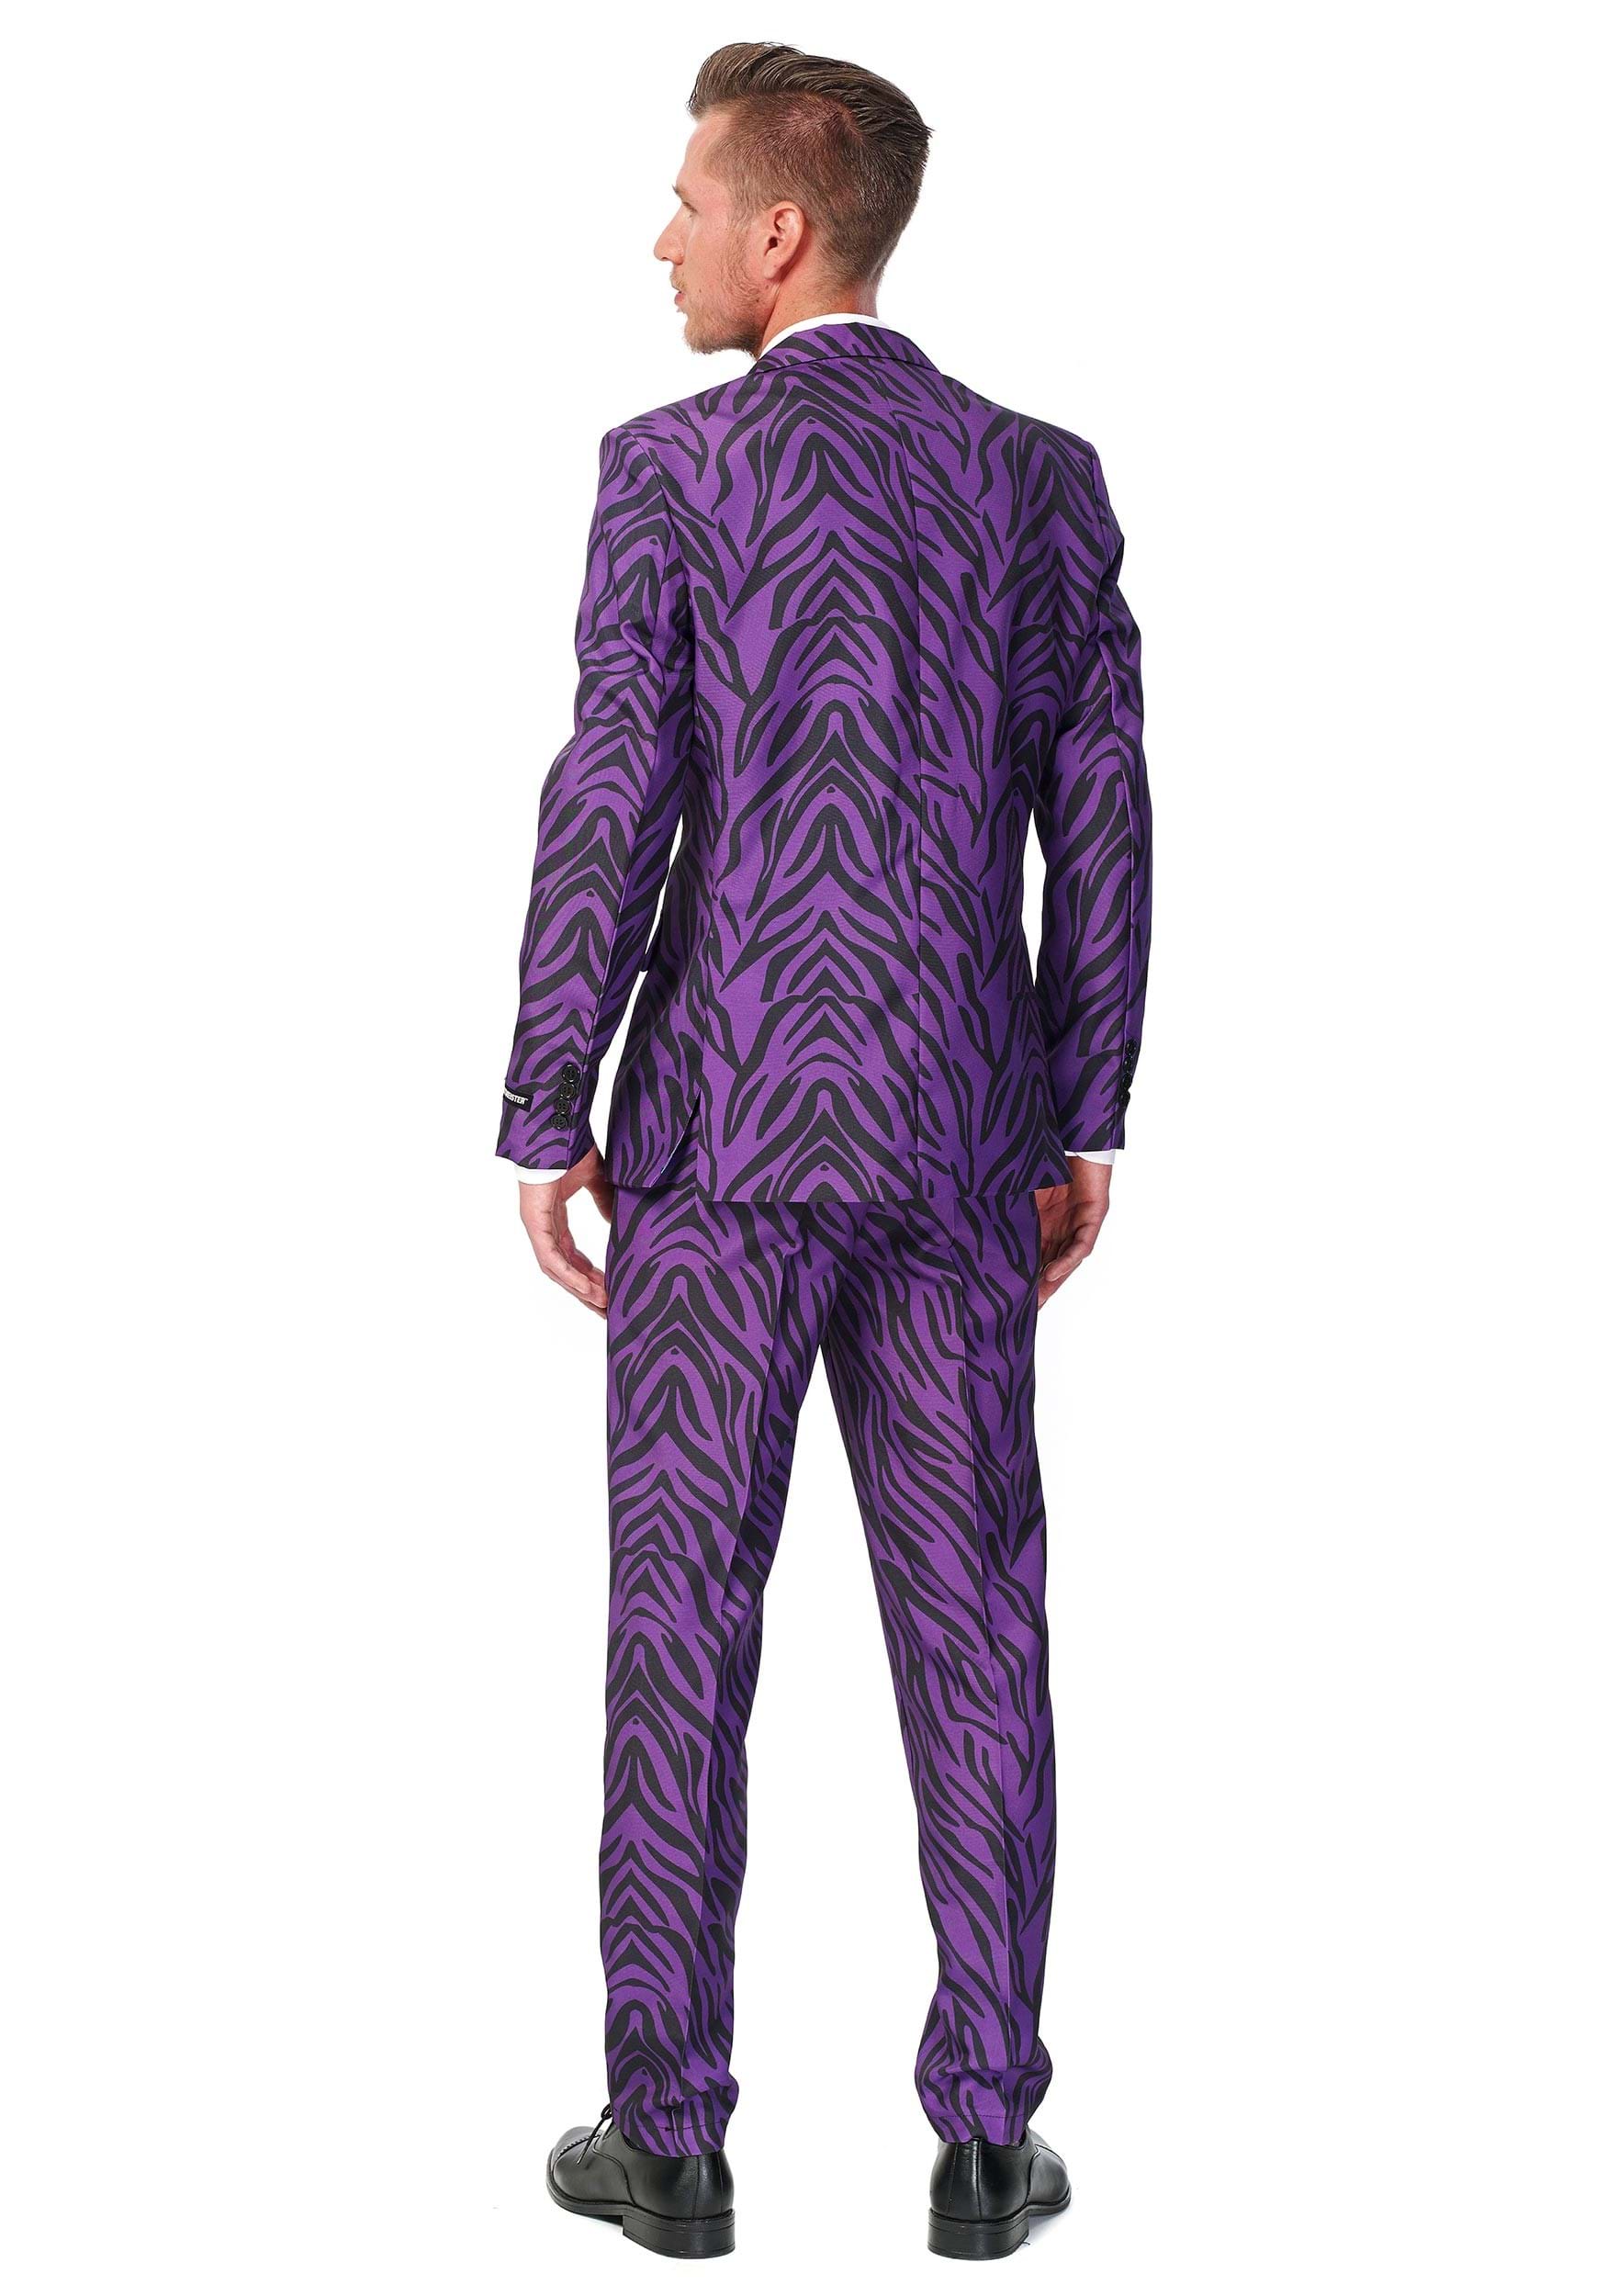 Suitmeister Basic Pimp Tiger Suit Costume For Men